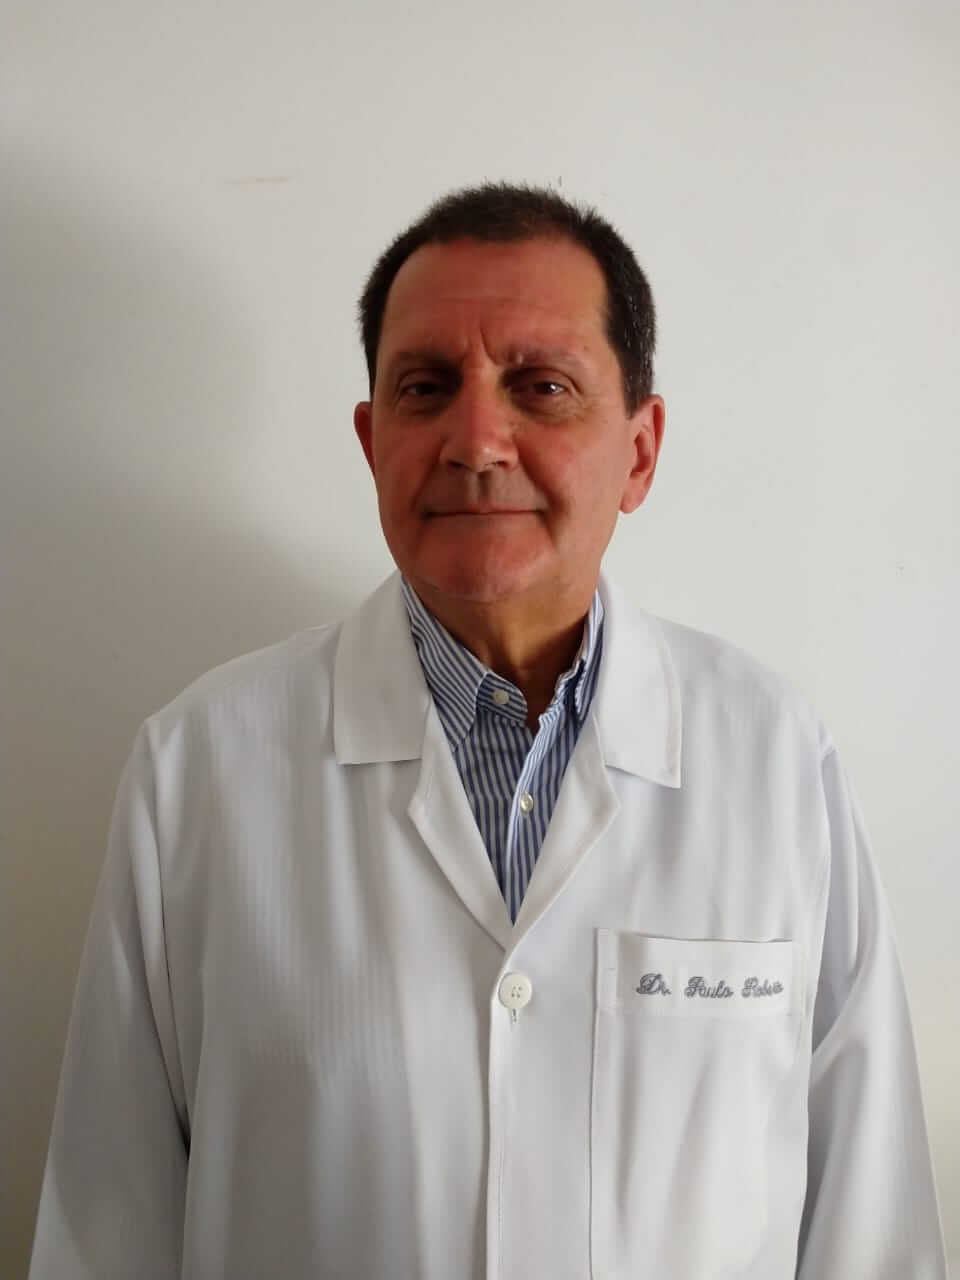   Dr. Paulo Roberto - Habitat Consultórios